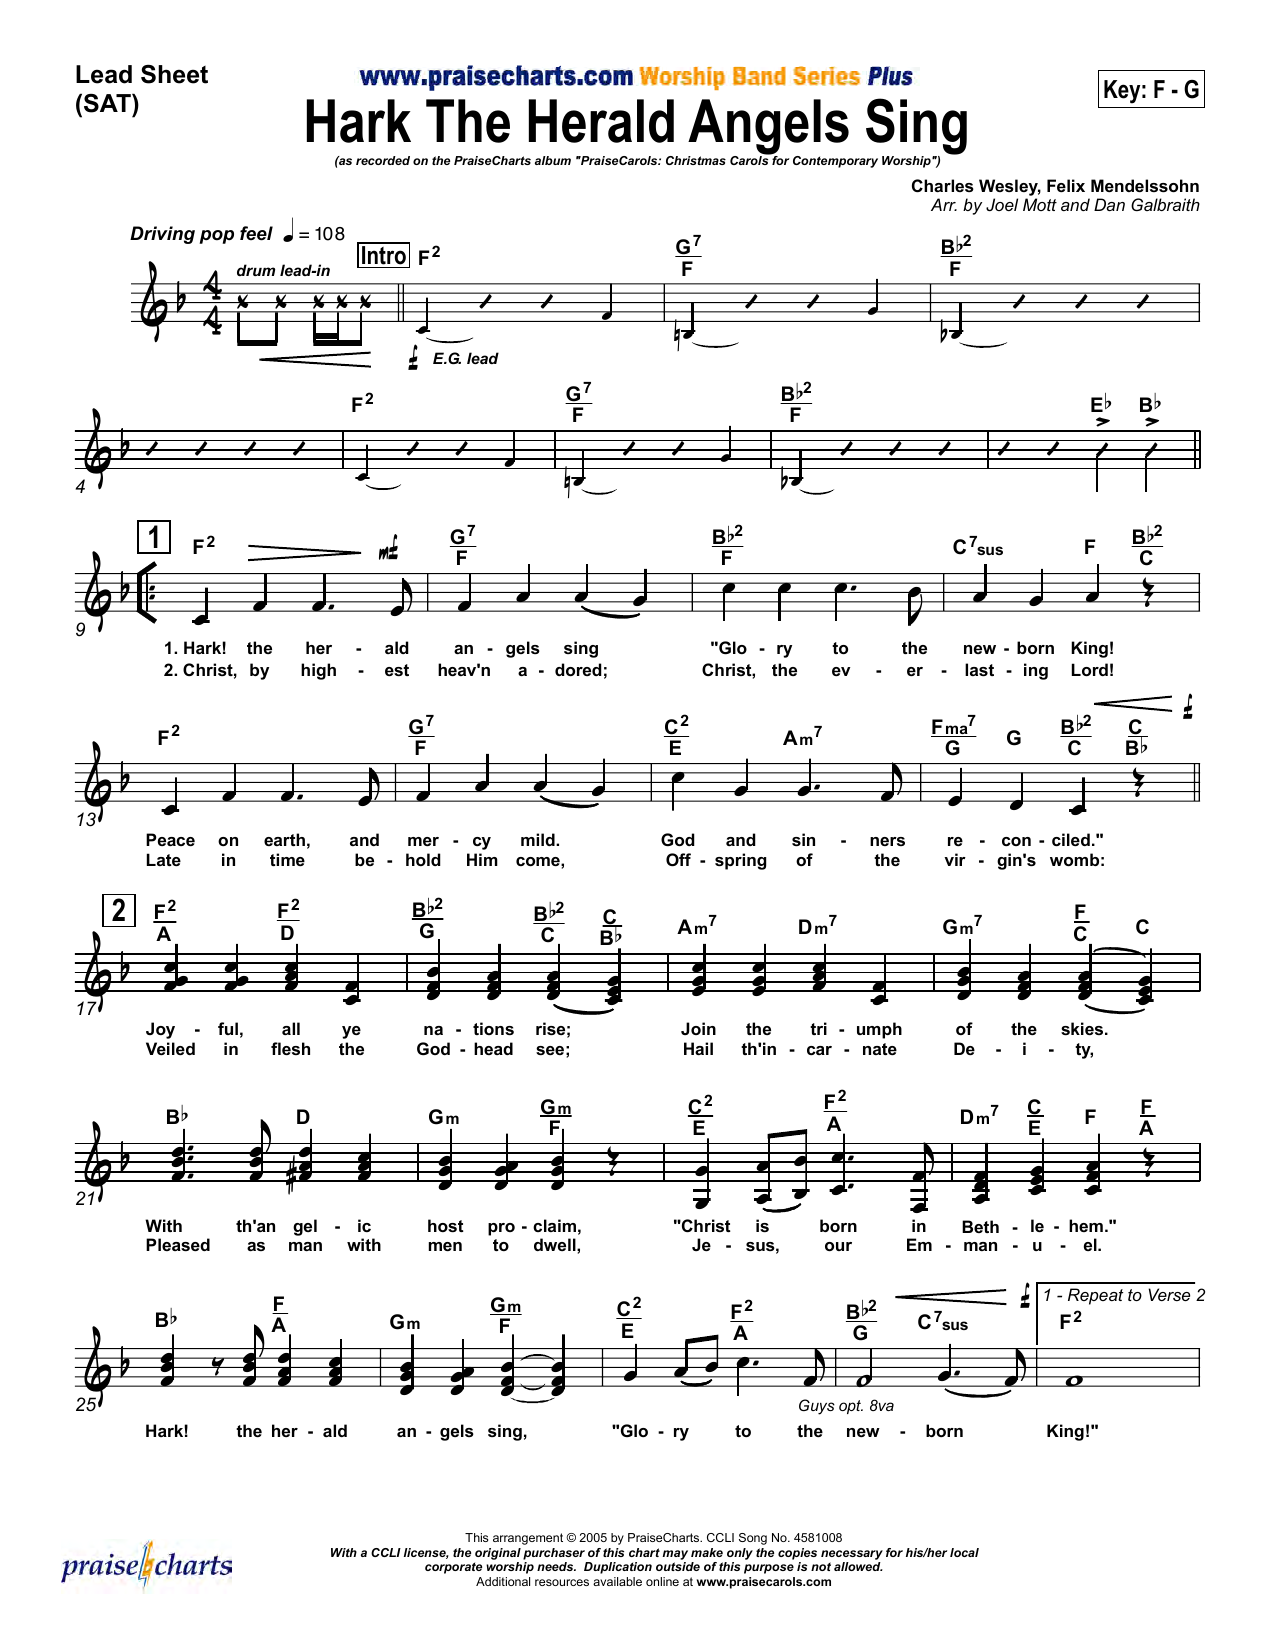 Dan Galbraith / Joel Mott Hark The Herald Angels Sing Sheet Music Notes & Chords for Lead Sheet / Fake Book - Download or Print PDF